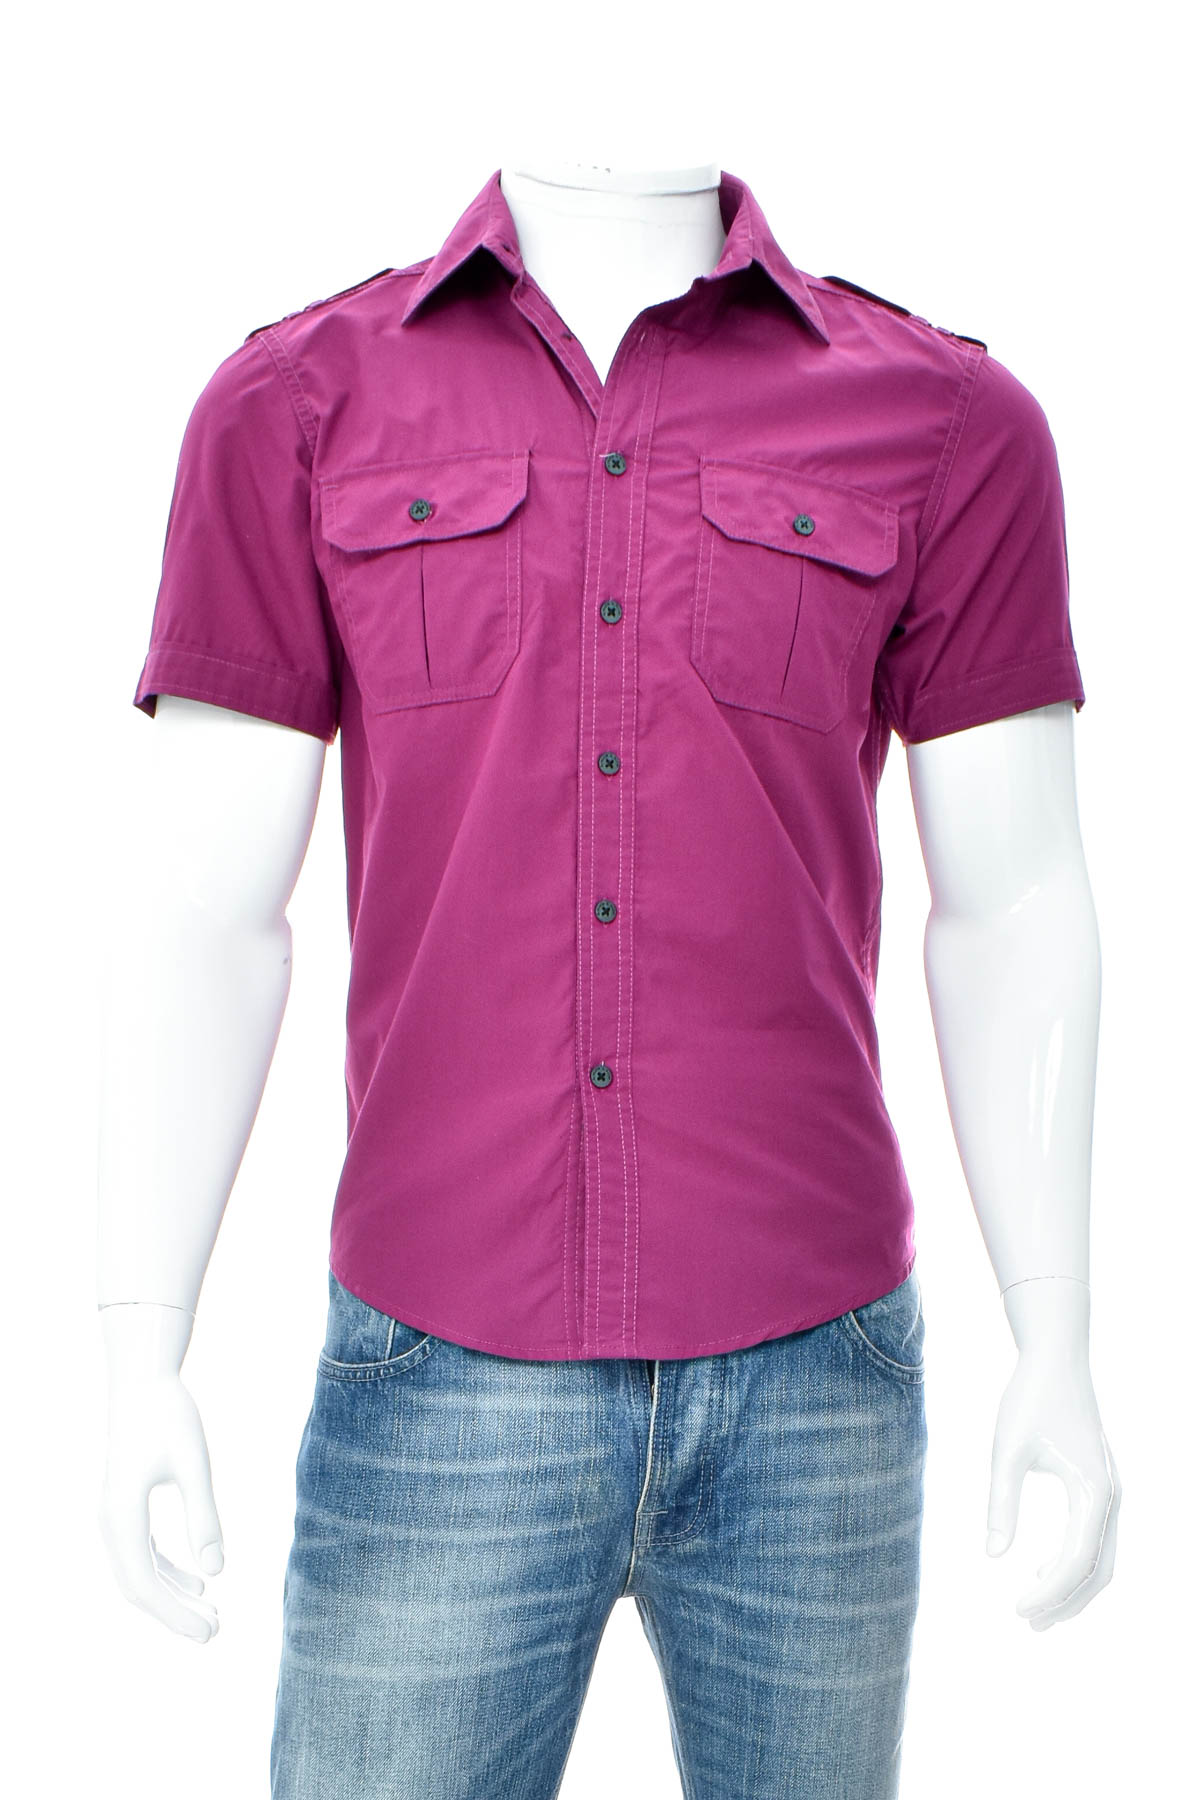 Men's shirt - Angelo Litrico - 0